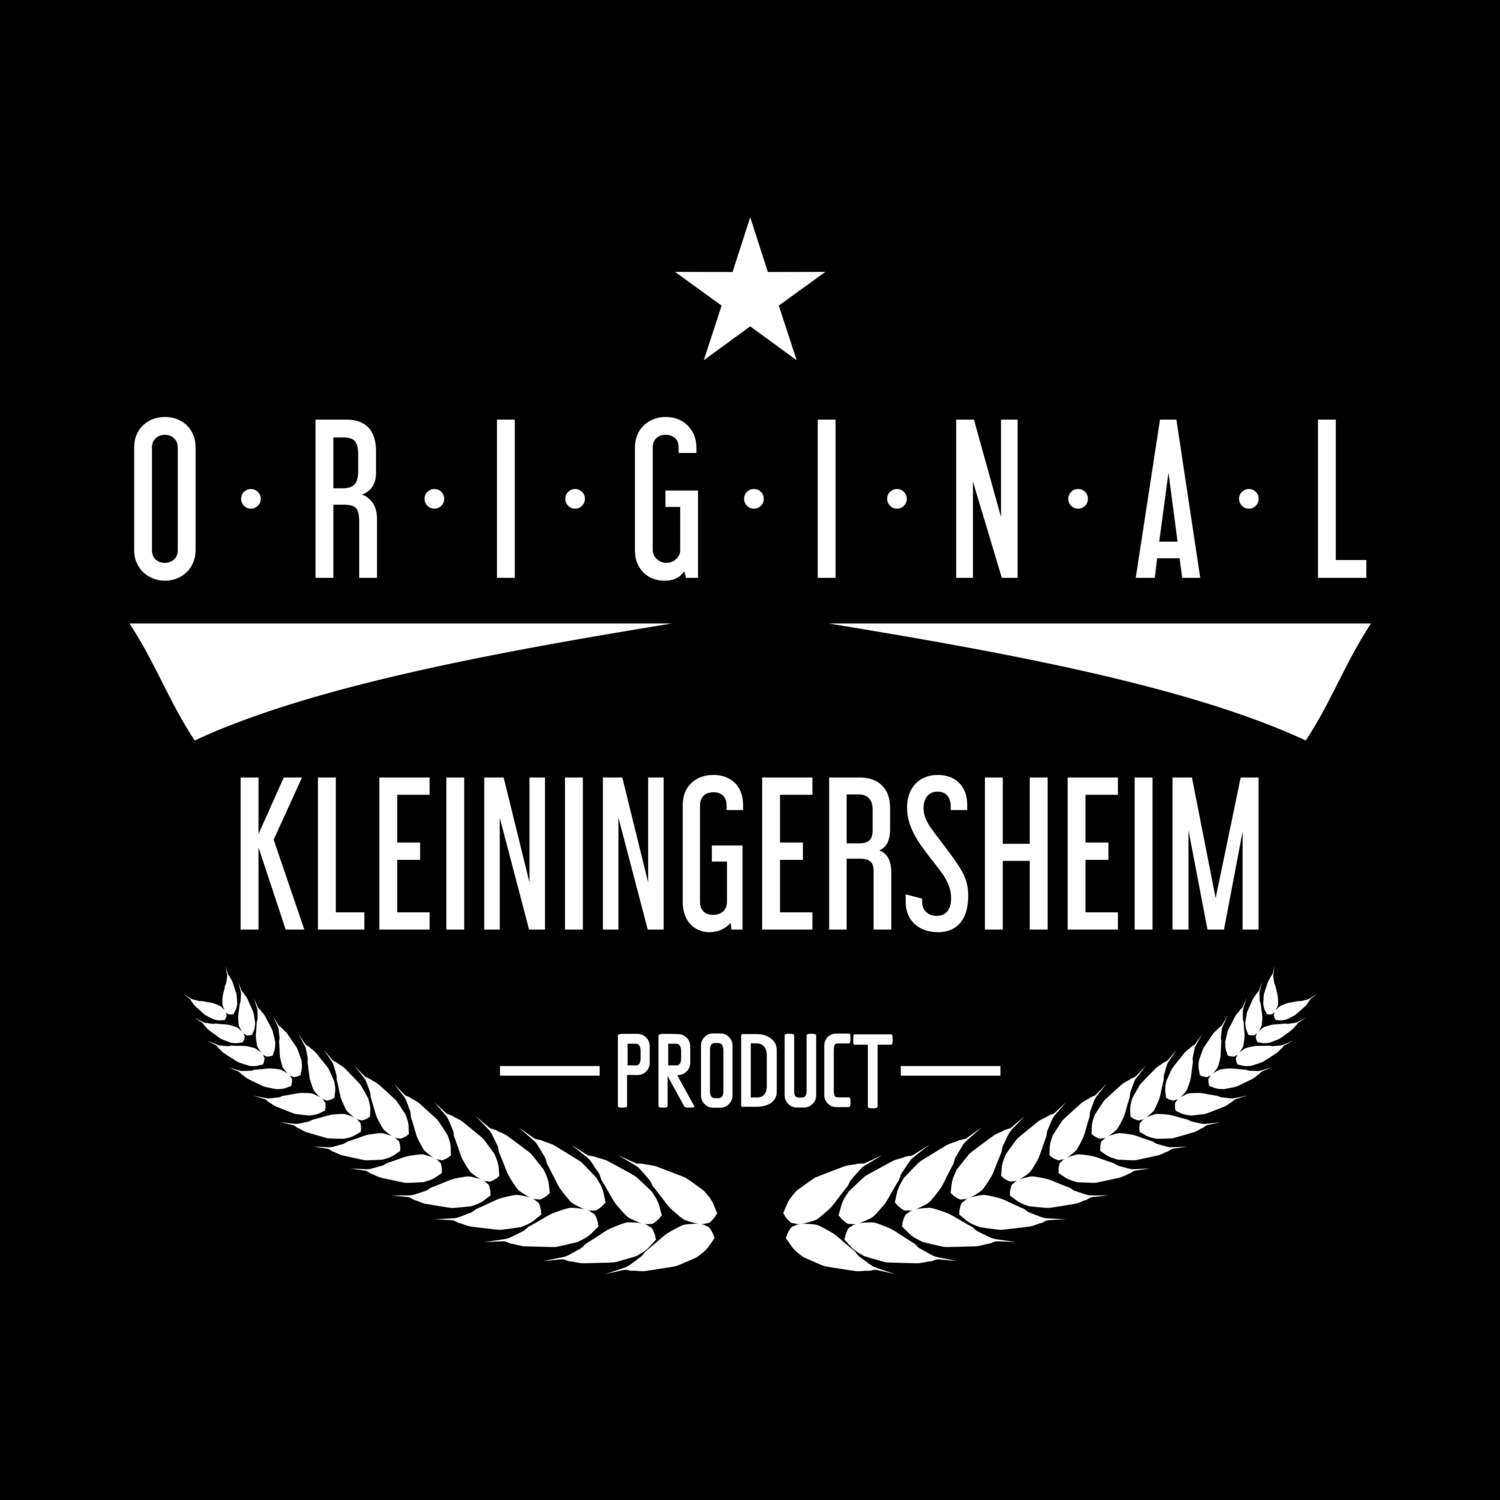 Kleiningersheim T-Shirt »Original Product«